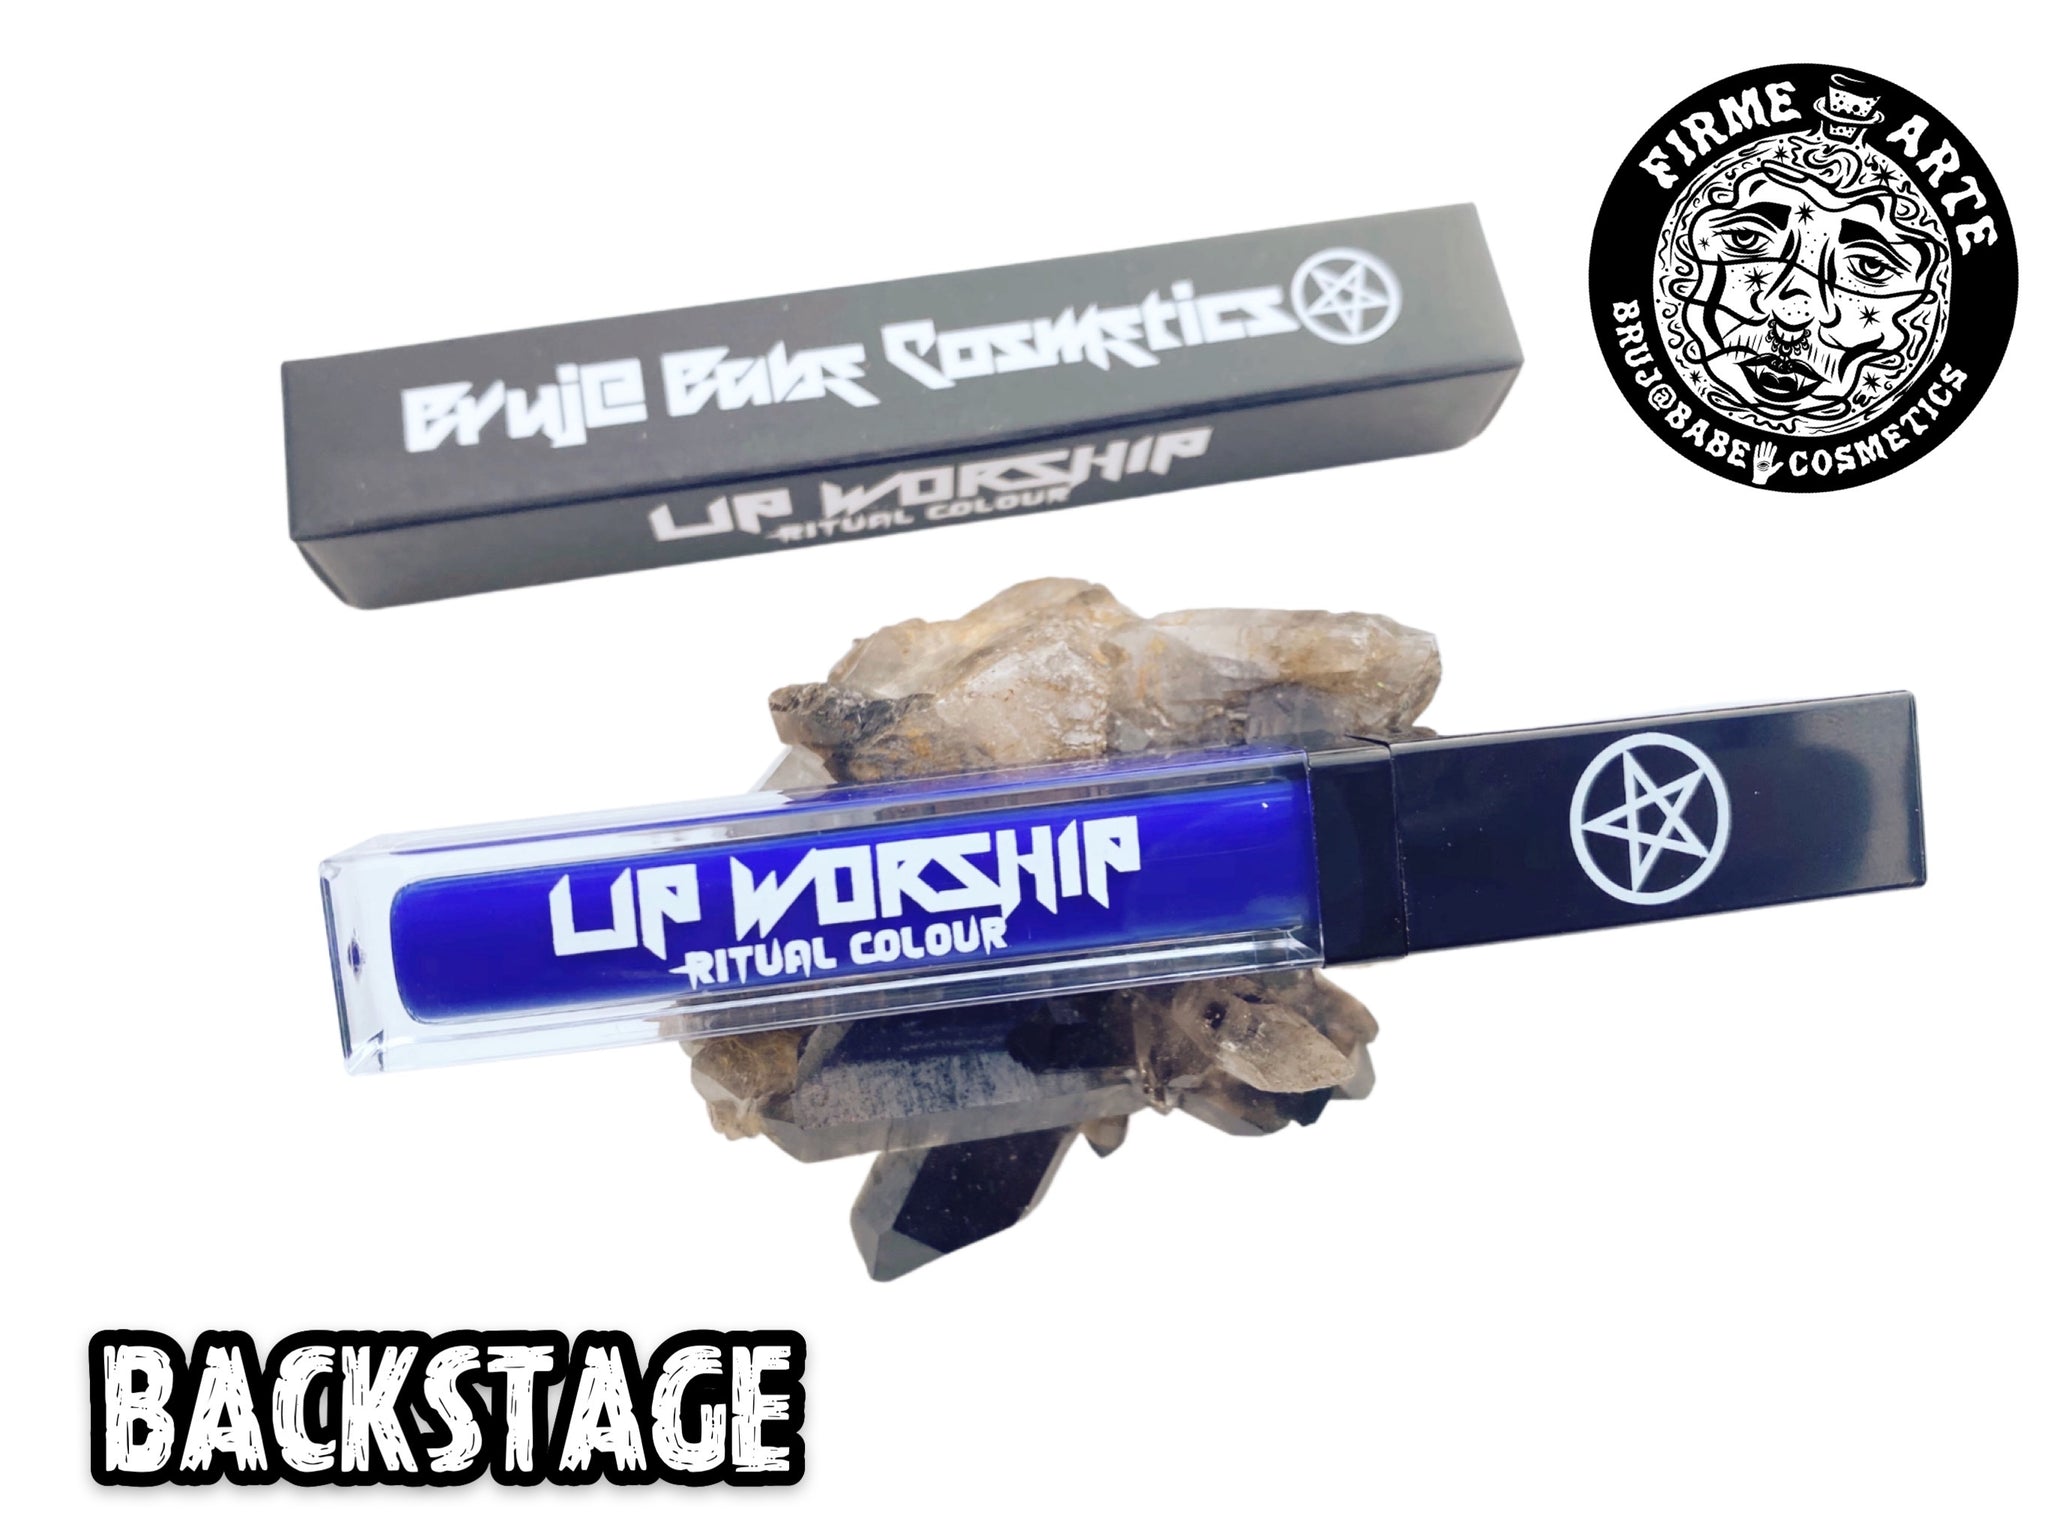 Lip worship | Ritual Colour | Backstage